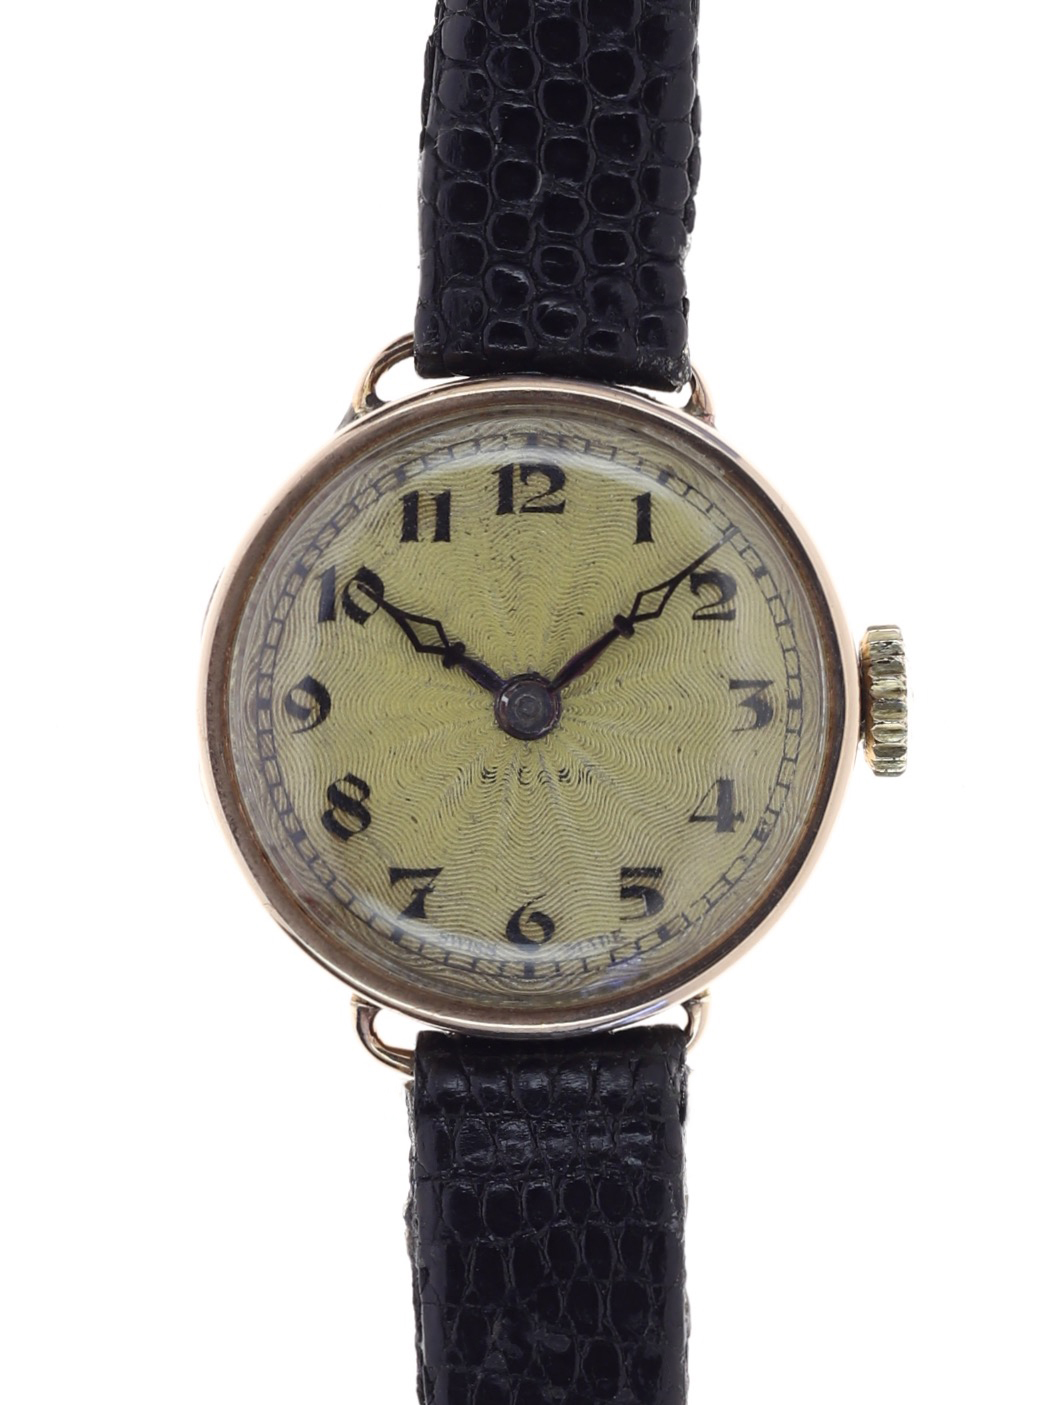 Rolex Unicorn 9 k Gold 1930s - Gisbert A. Joseph Watches